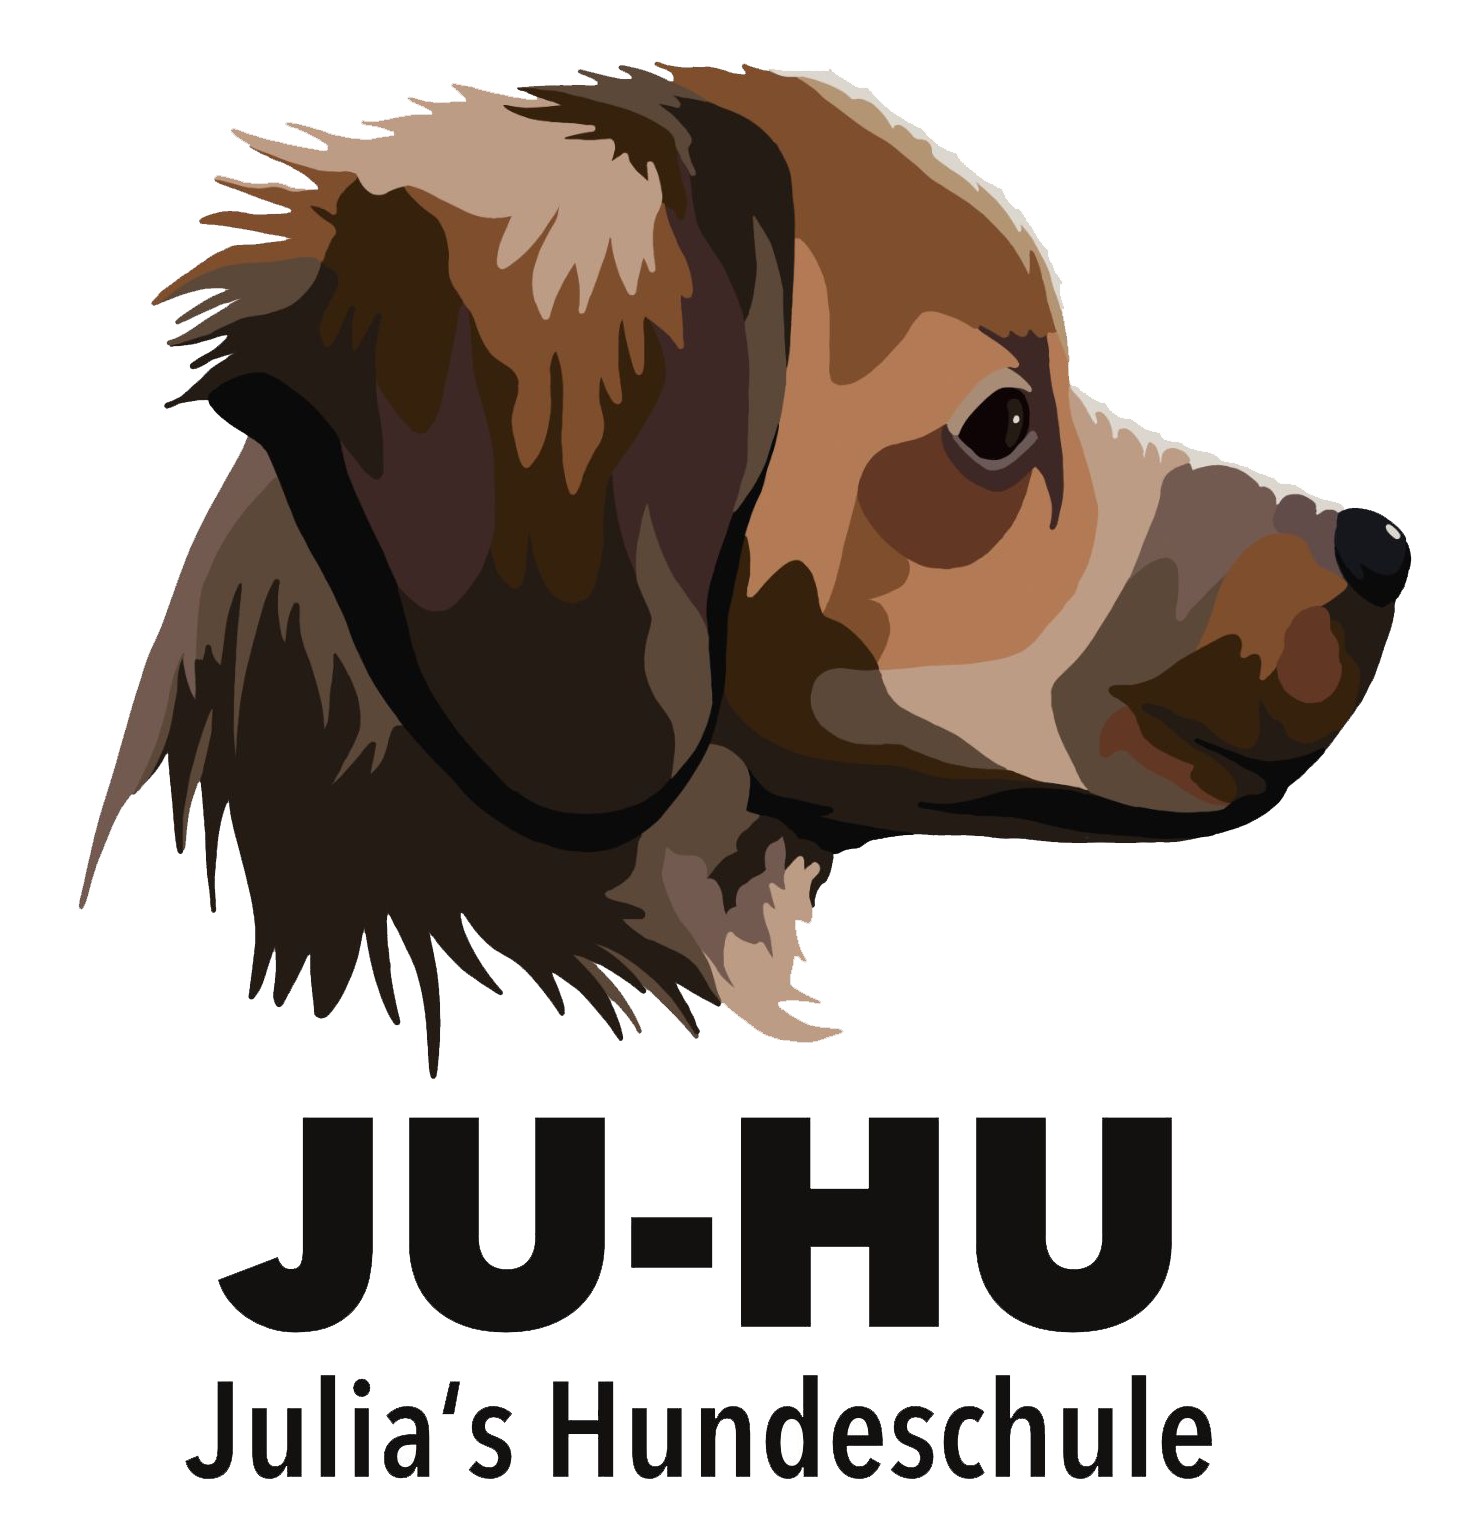 Julia's Hundeschule